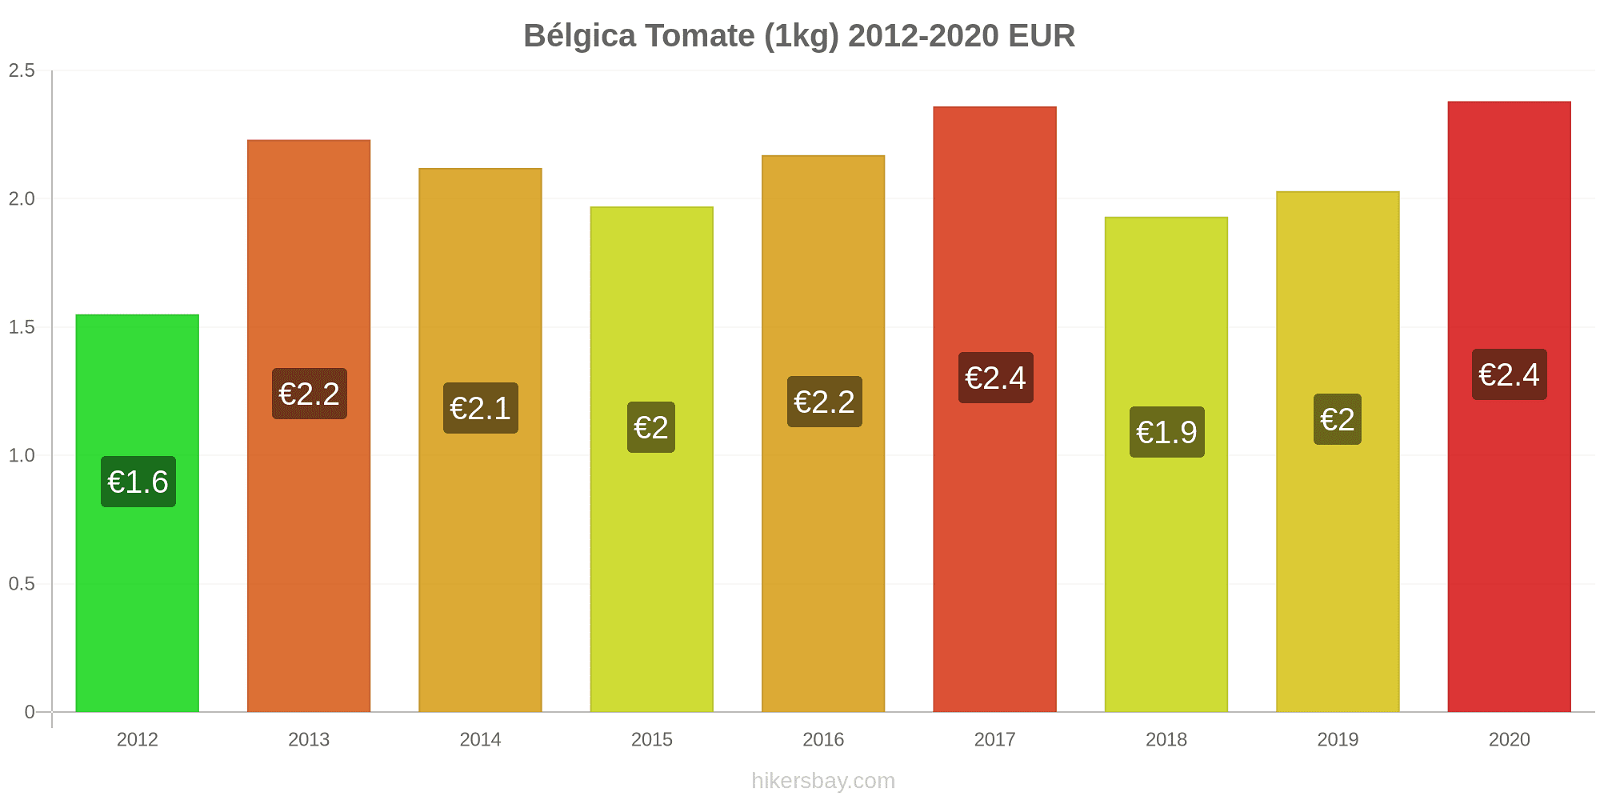 Bélgica cambios de precios Tomate (1kg) hikersbay.com